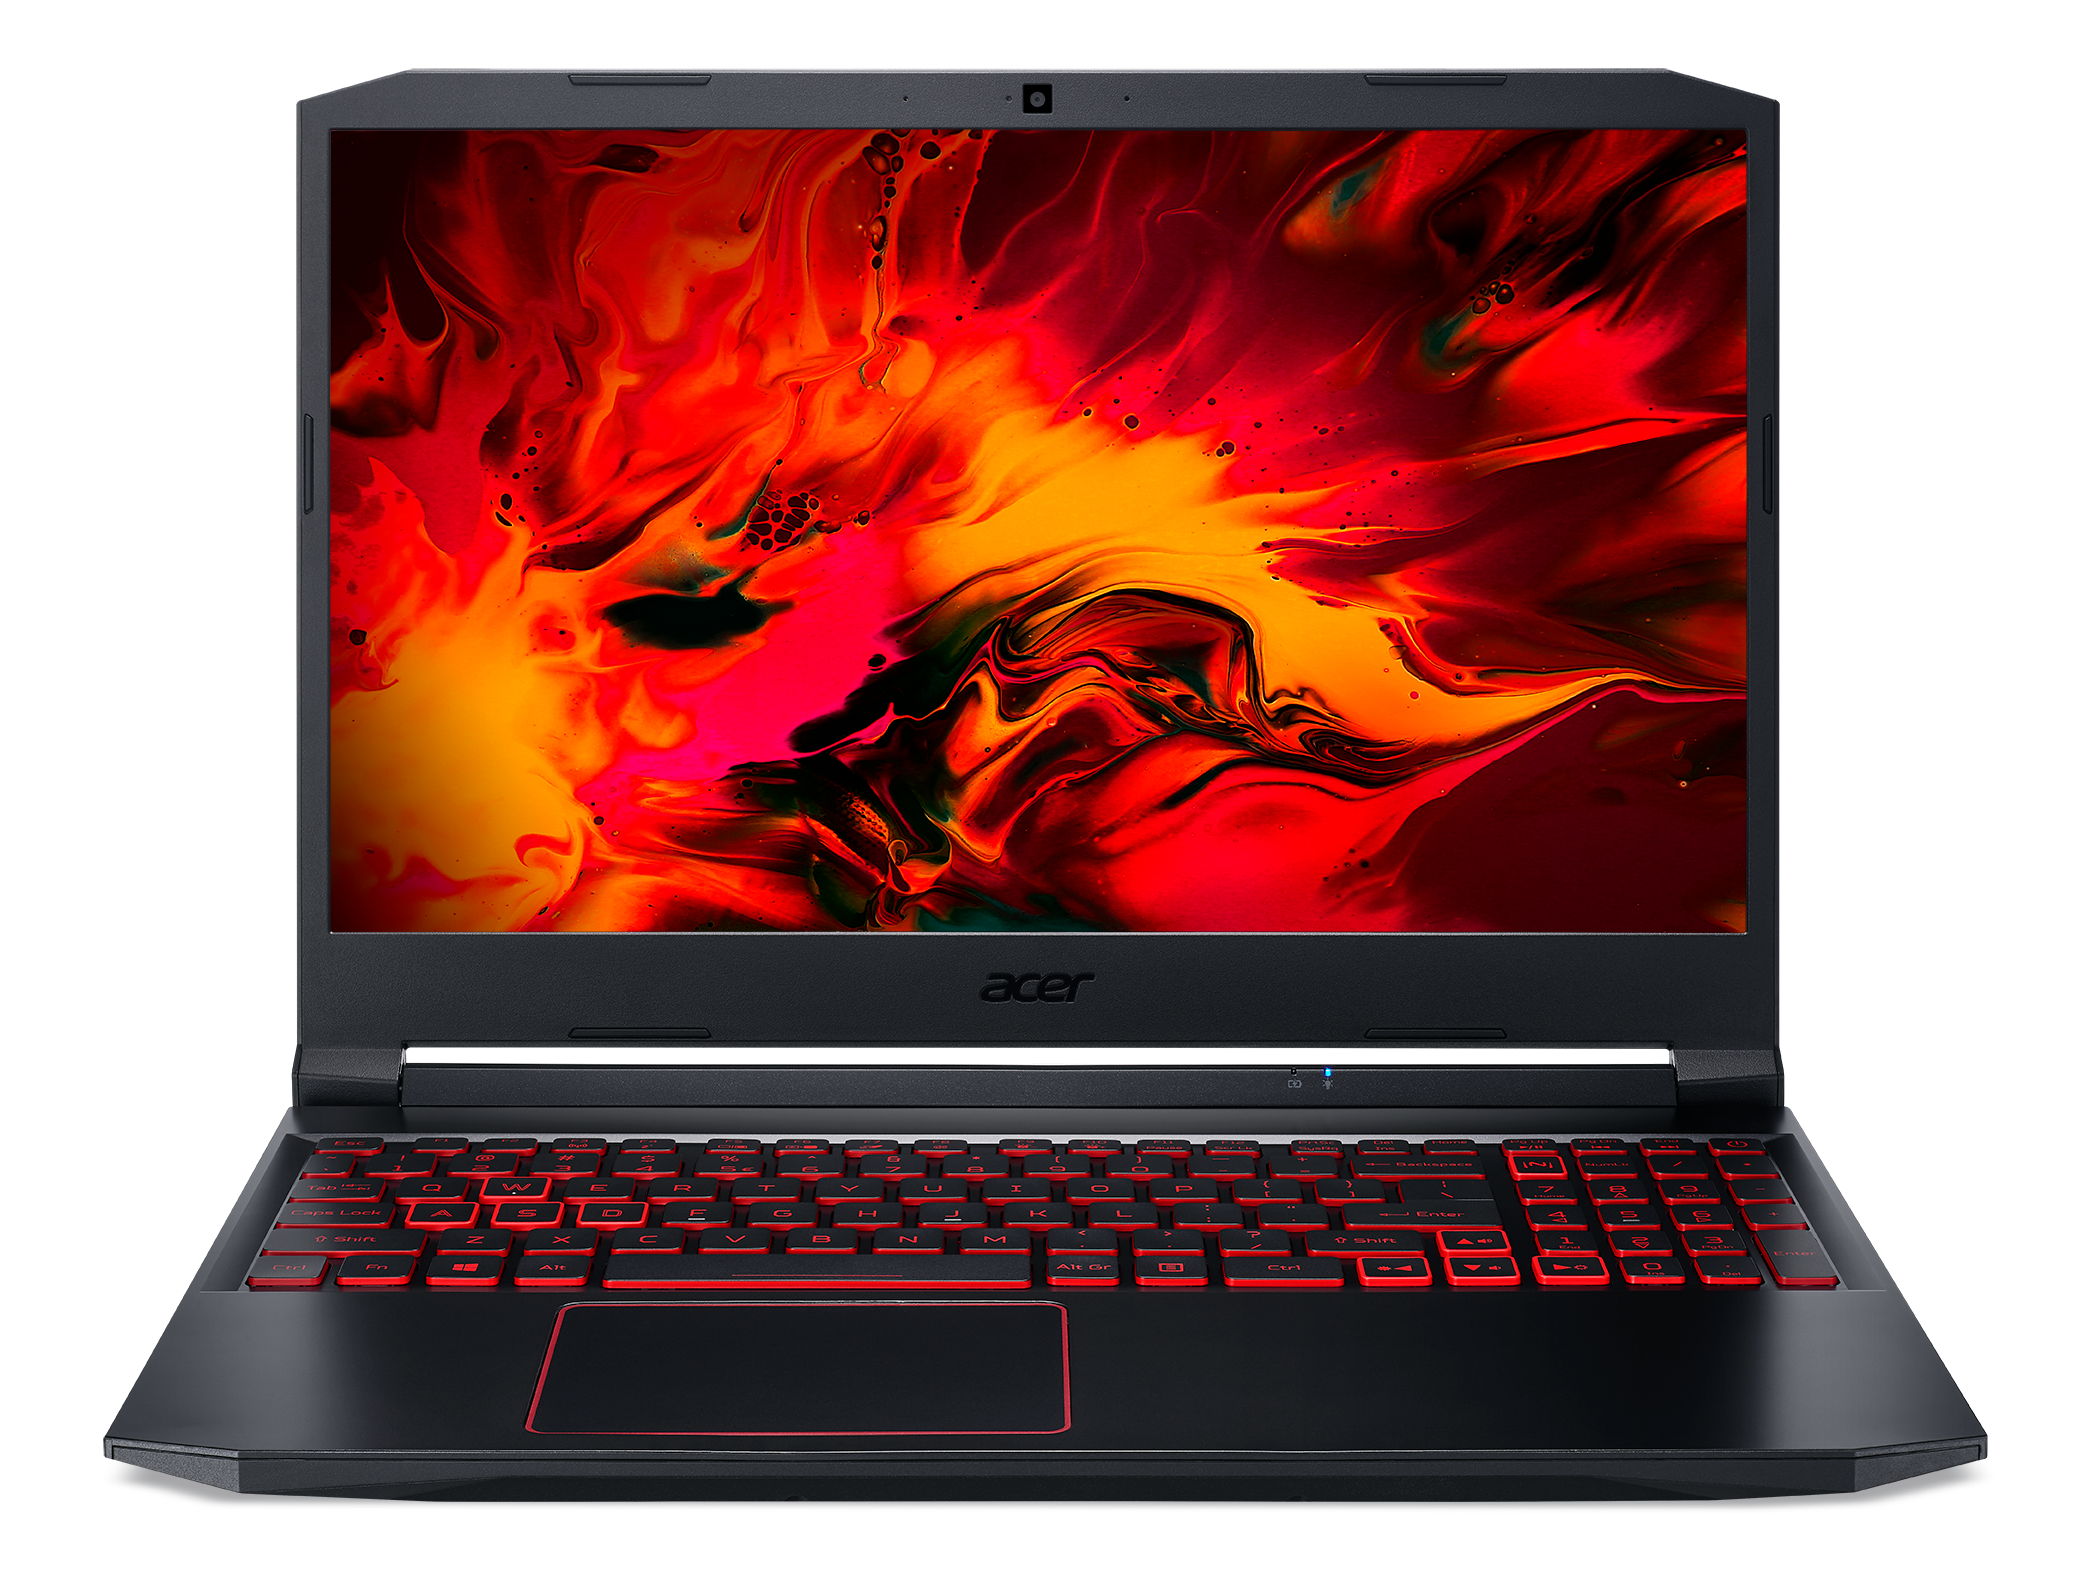 Acer Nitro 5 i5 RTX 3050Ti Gaming Laptop, 15.6" FHD 144Hz IPS Display, Intel Core i5-10300H, NVIDIA GeForce RTX 3050Ti, 16GB DDR4, 512GB NVMe SSD, Black, Windows 10 Home, AN515-55-57C4 - image 2 of 10